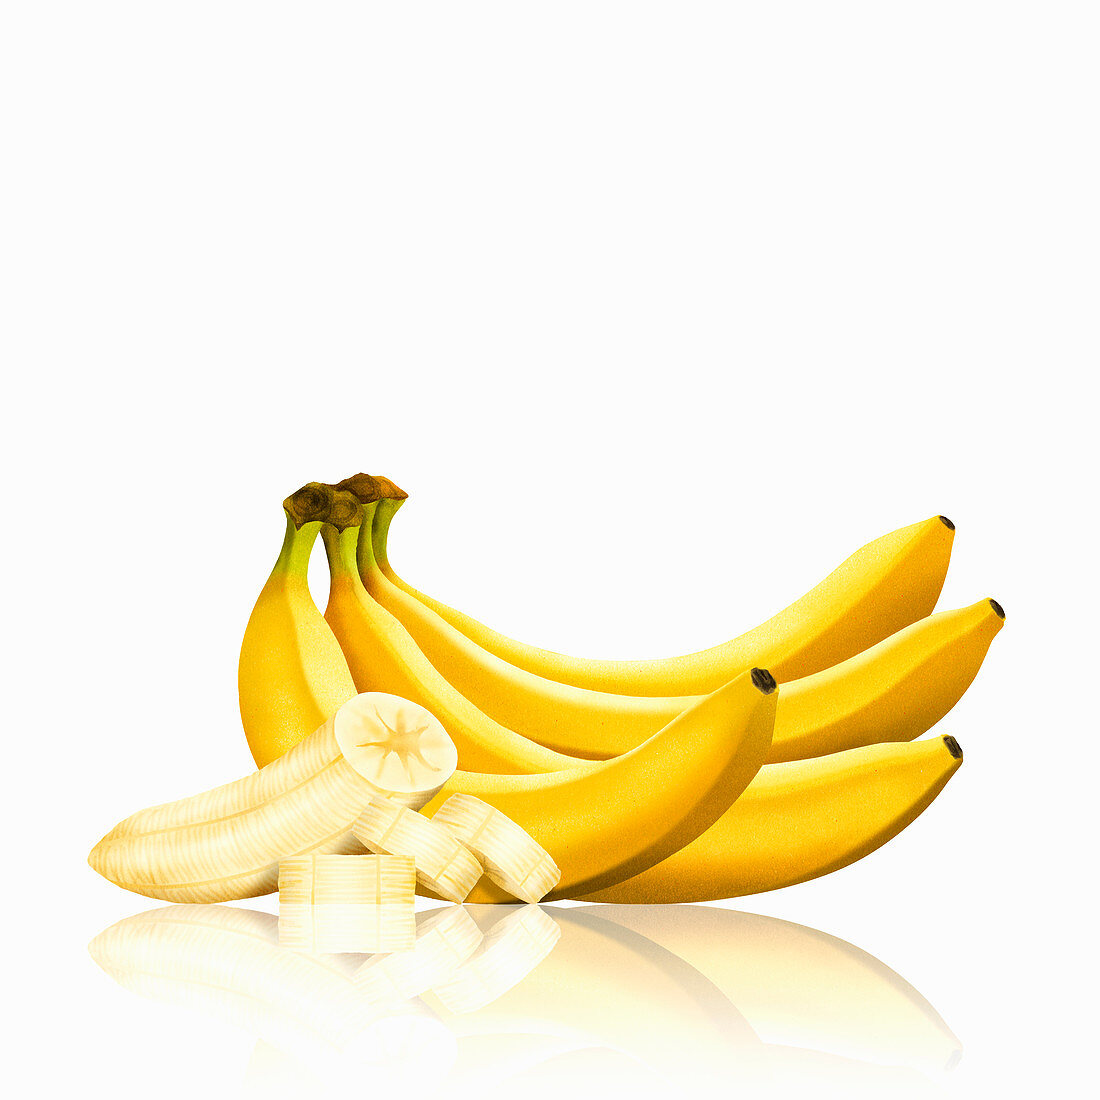 Bunch of bananas and slices of peeled banana, illustration